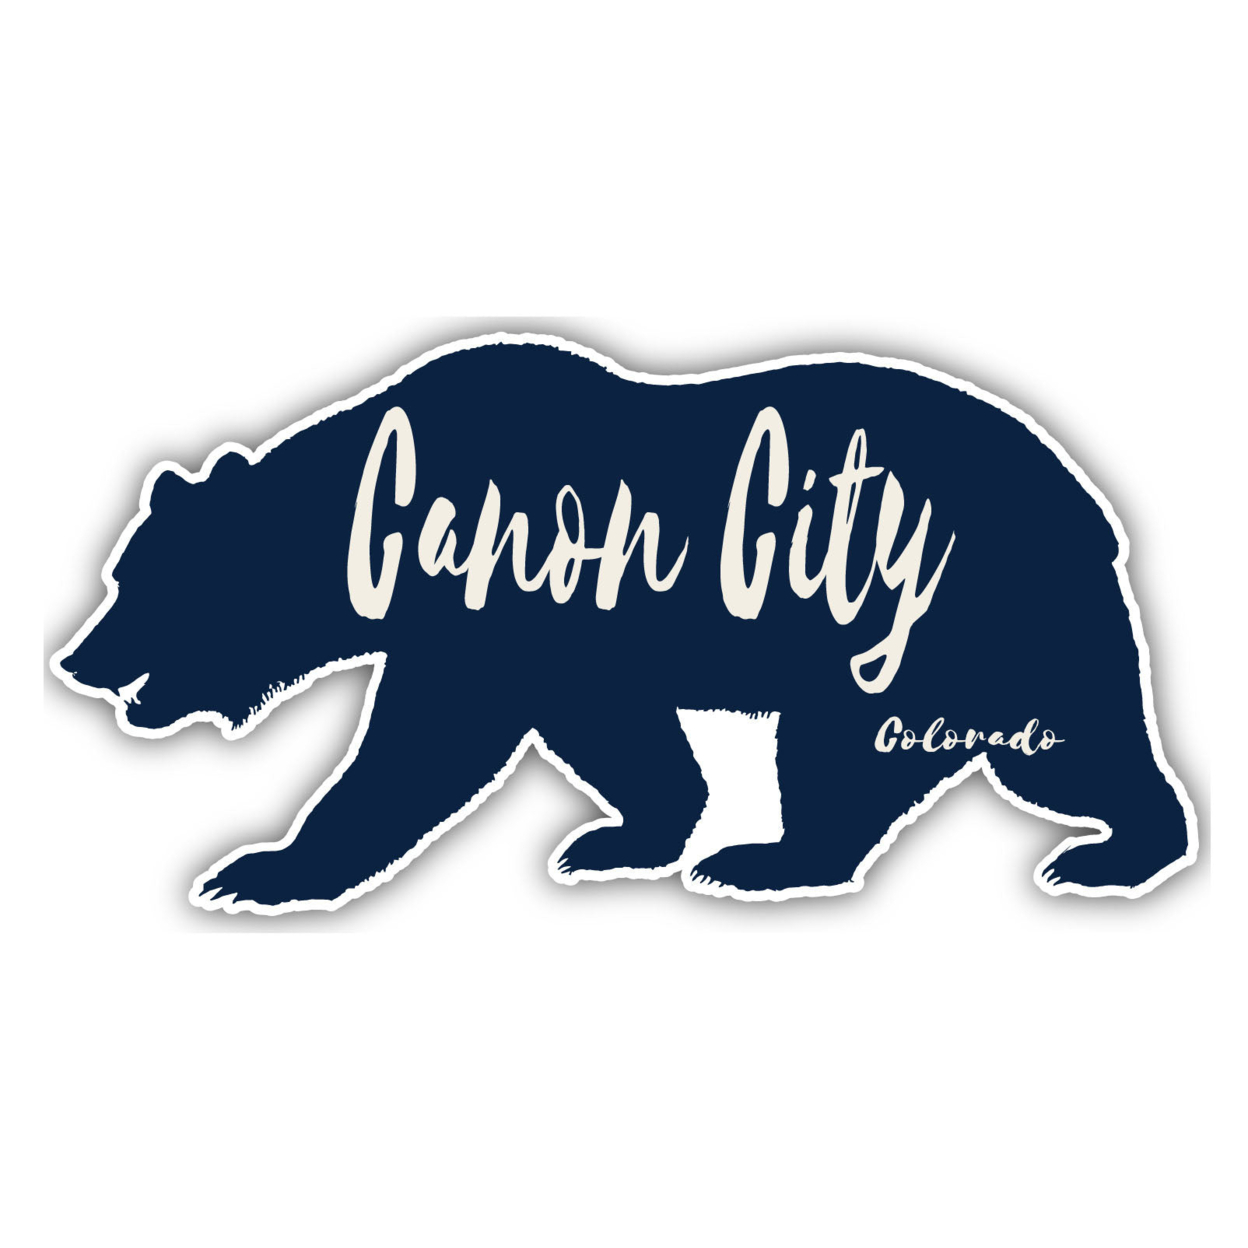 Canon City Colorado Souvenir Decorative Stickers (Choose Theme And Size) - Single Unit, 8-Inch, Tent